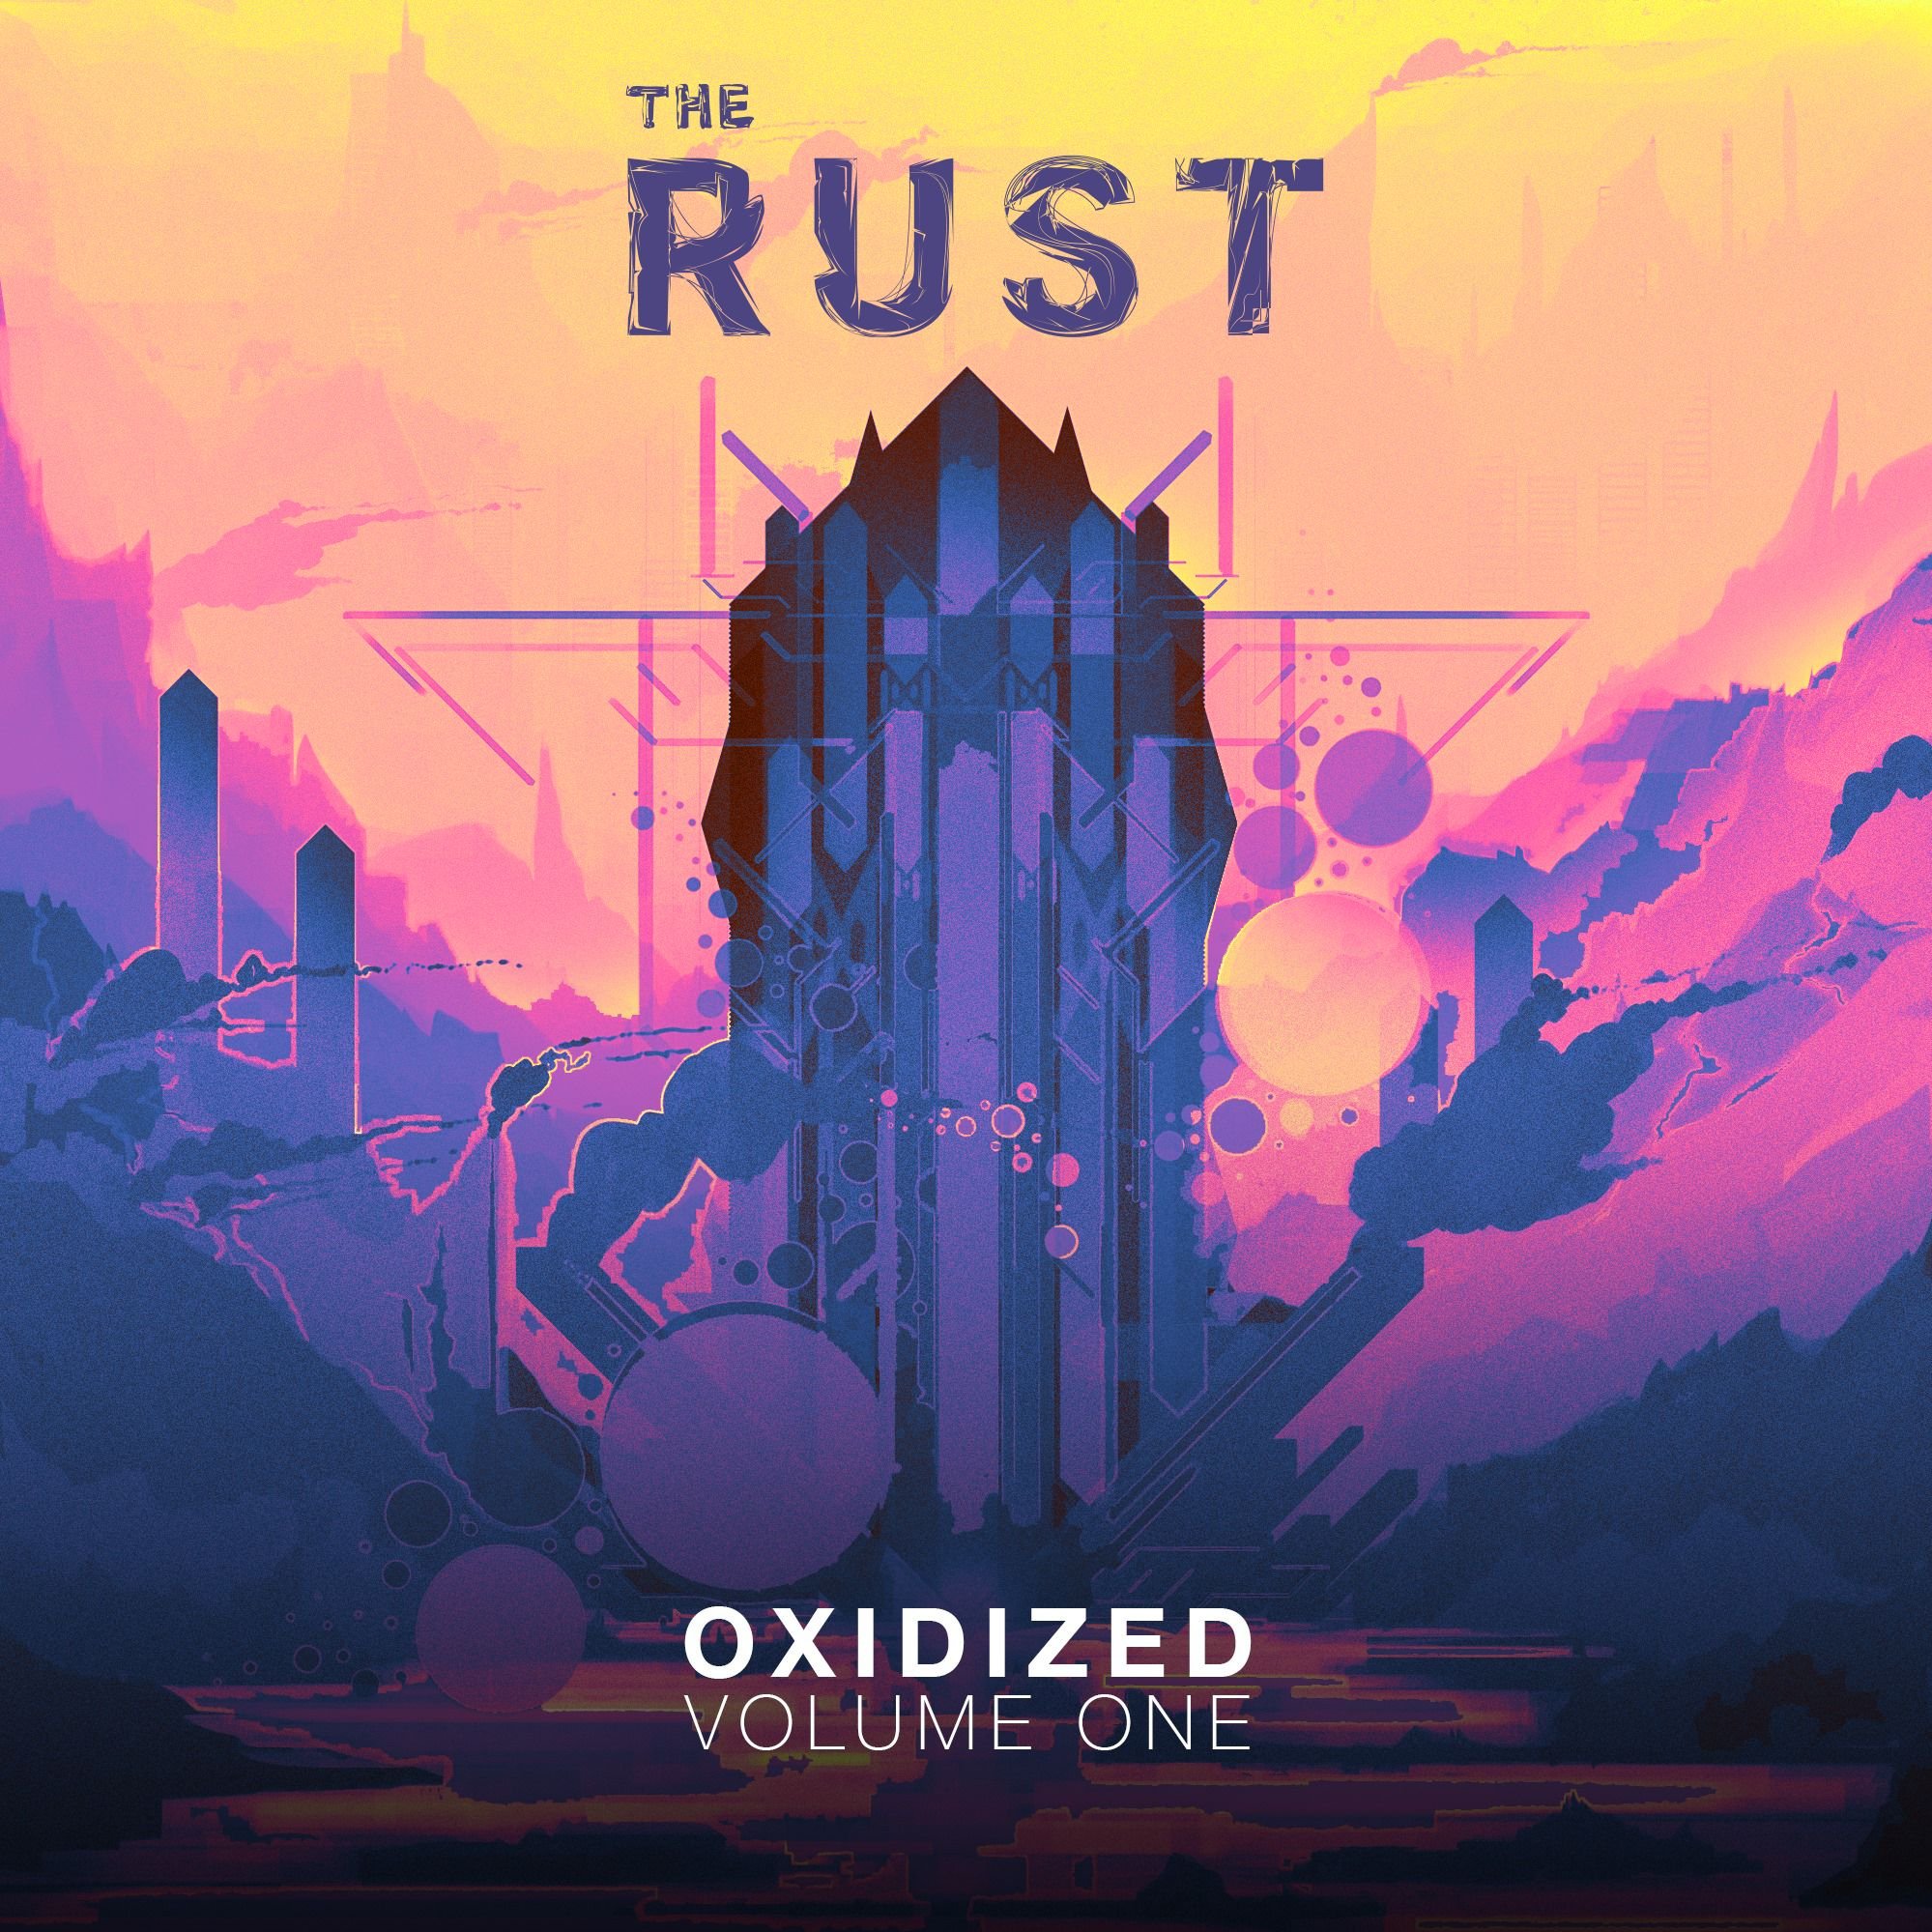 Oxidized, Vol. 1 (The Rust Music)